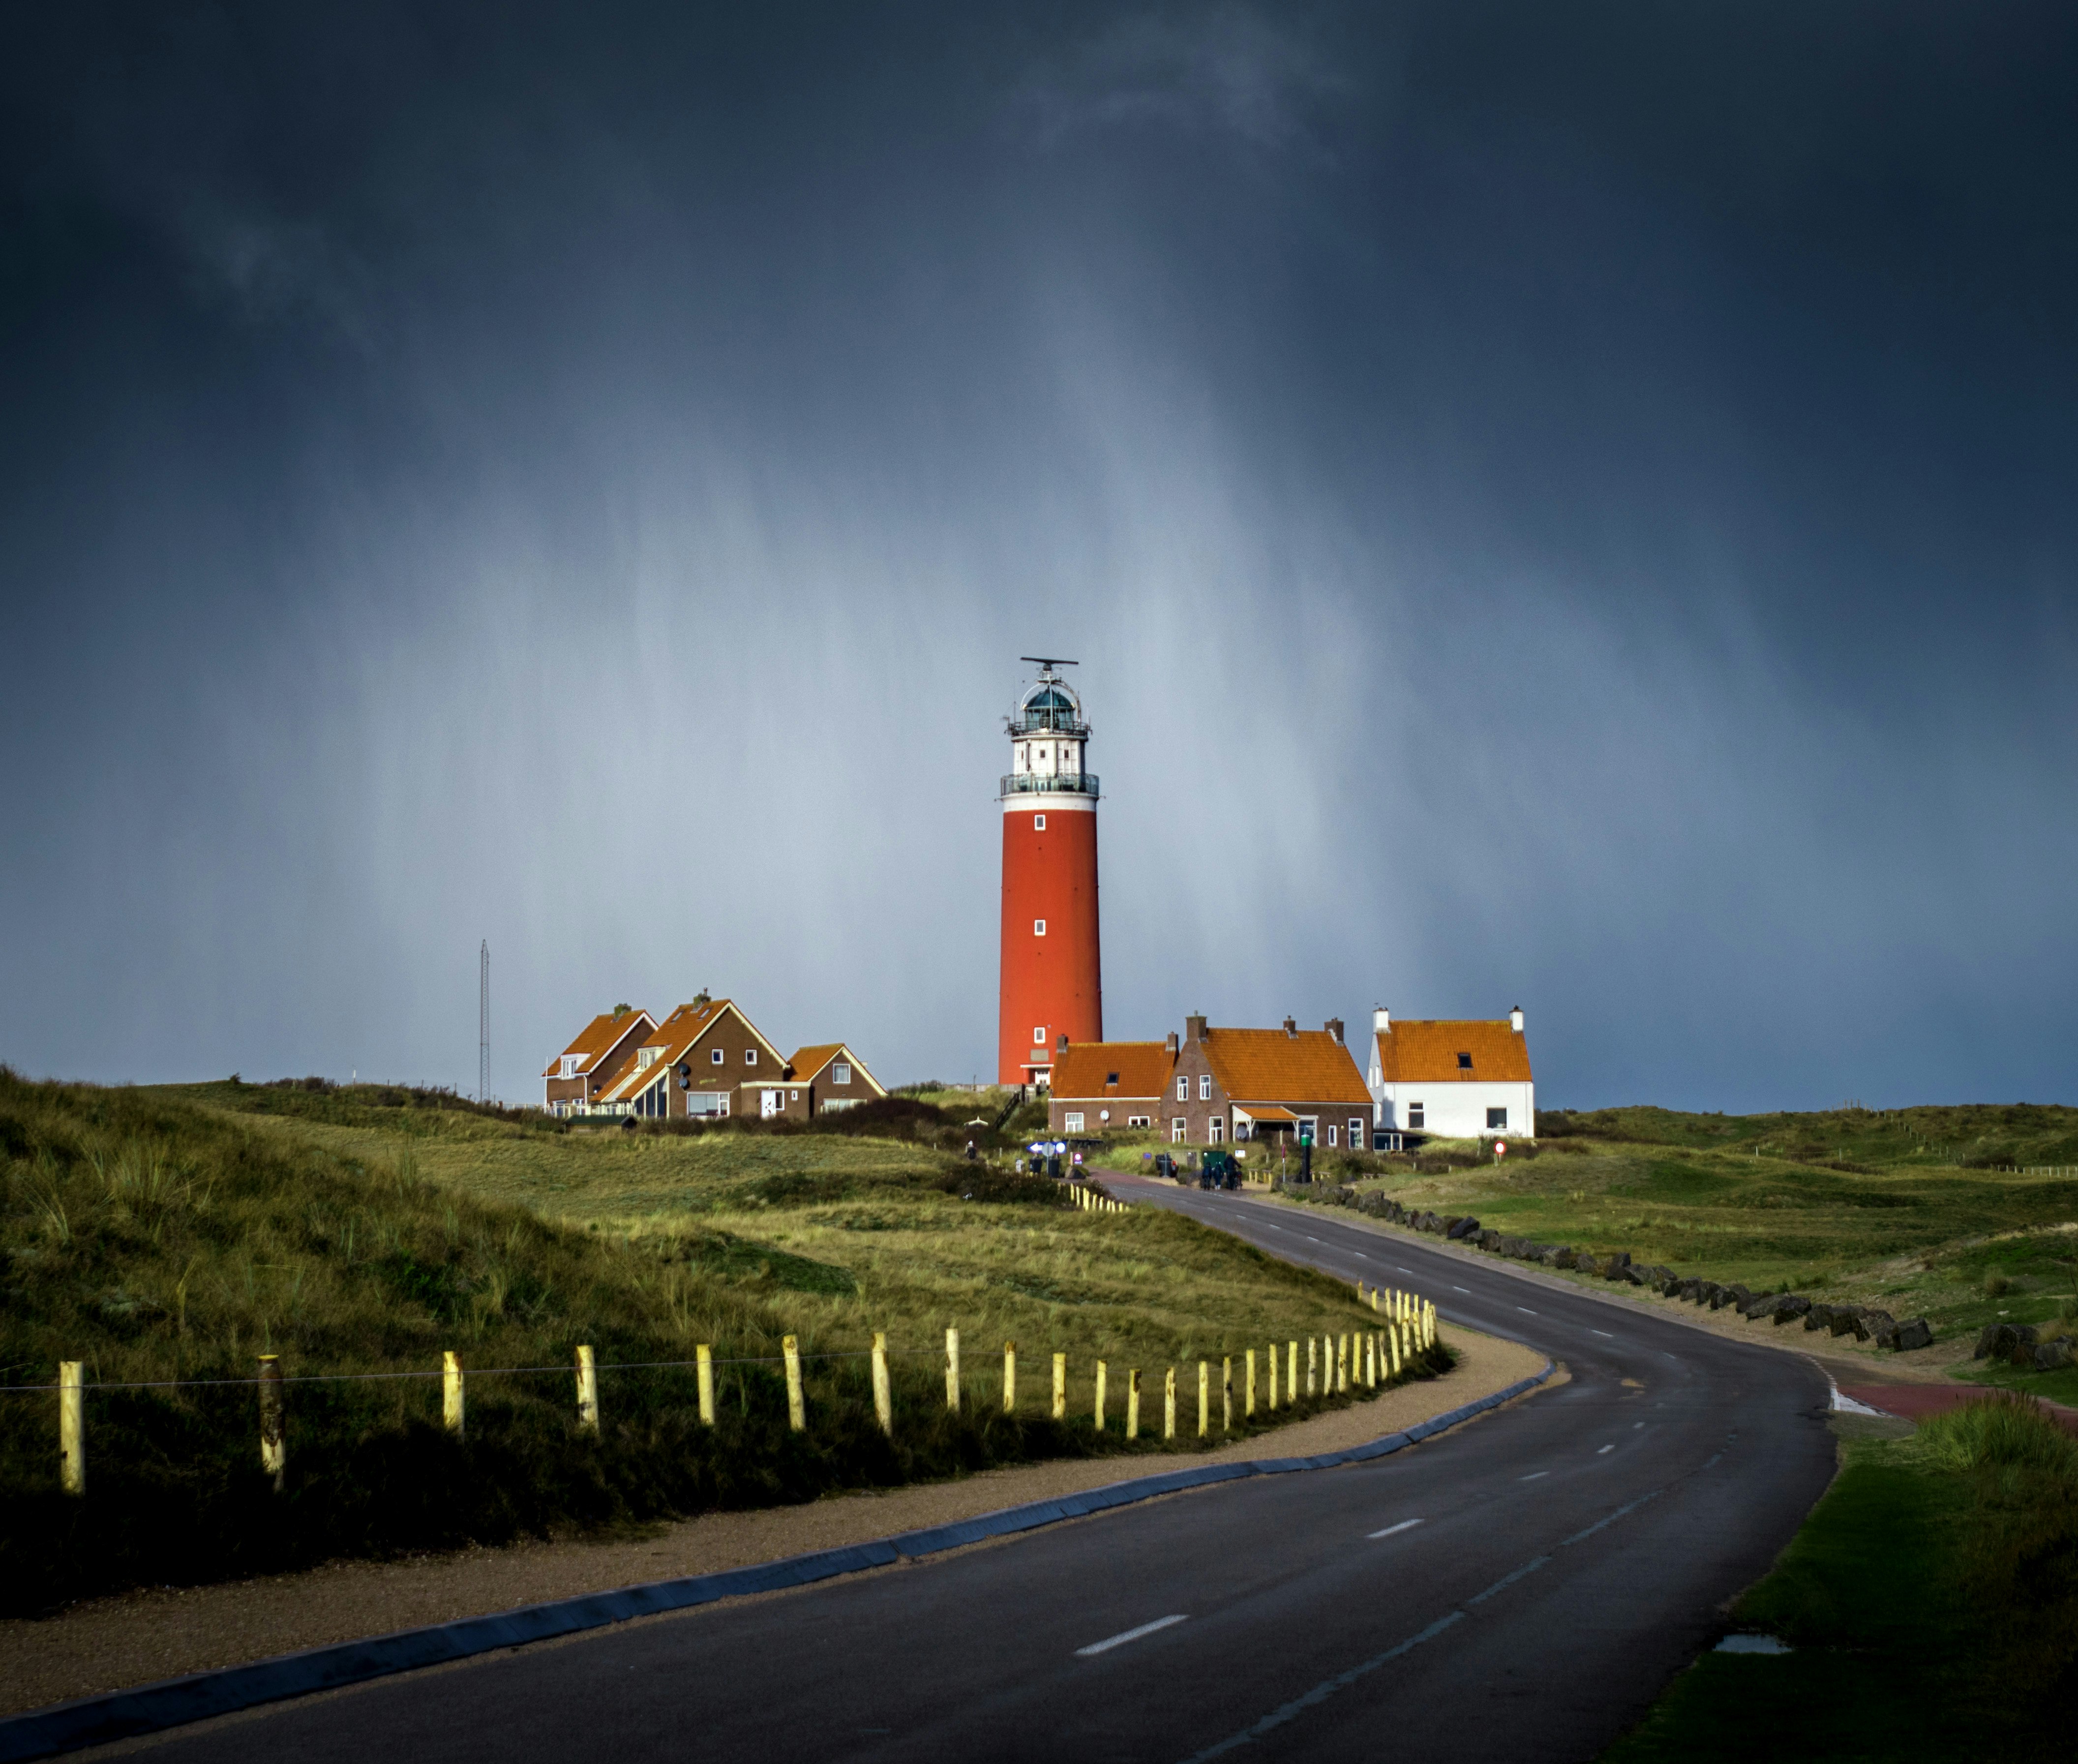 asphalt road between grass field going to brown lighthouse beside houses under cloudy sky